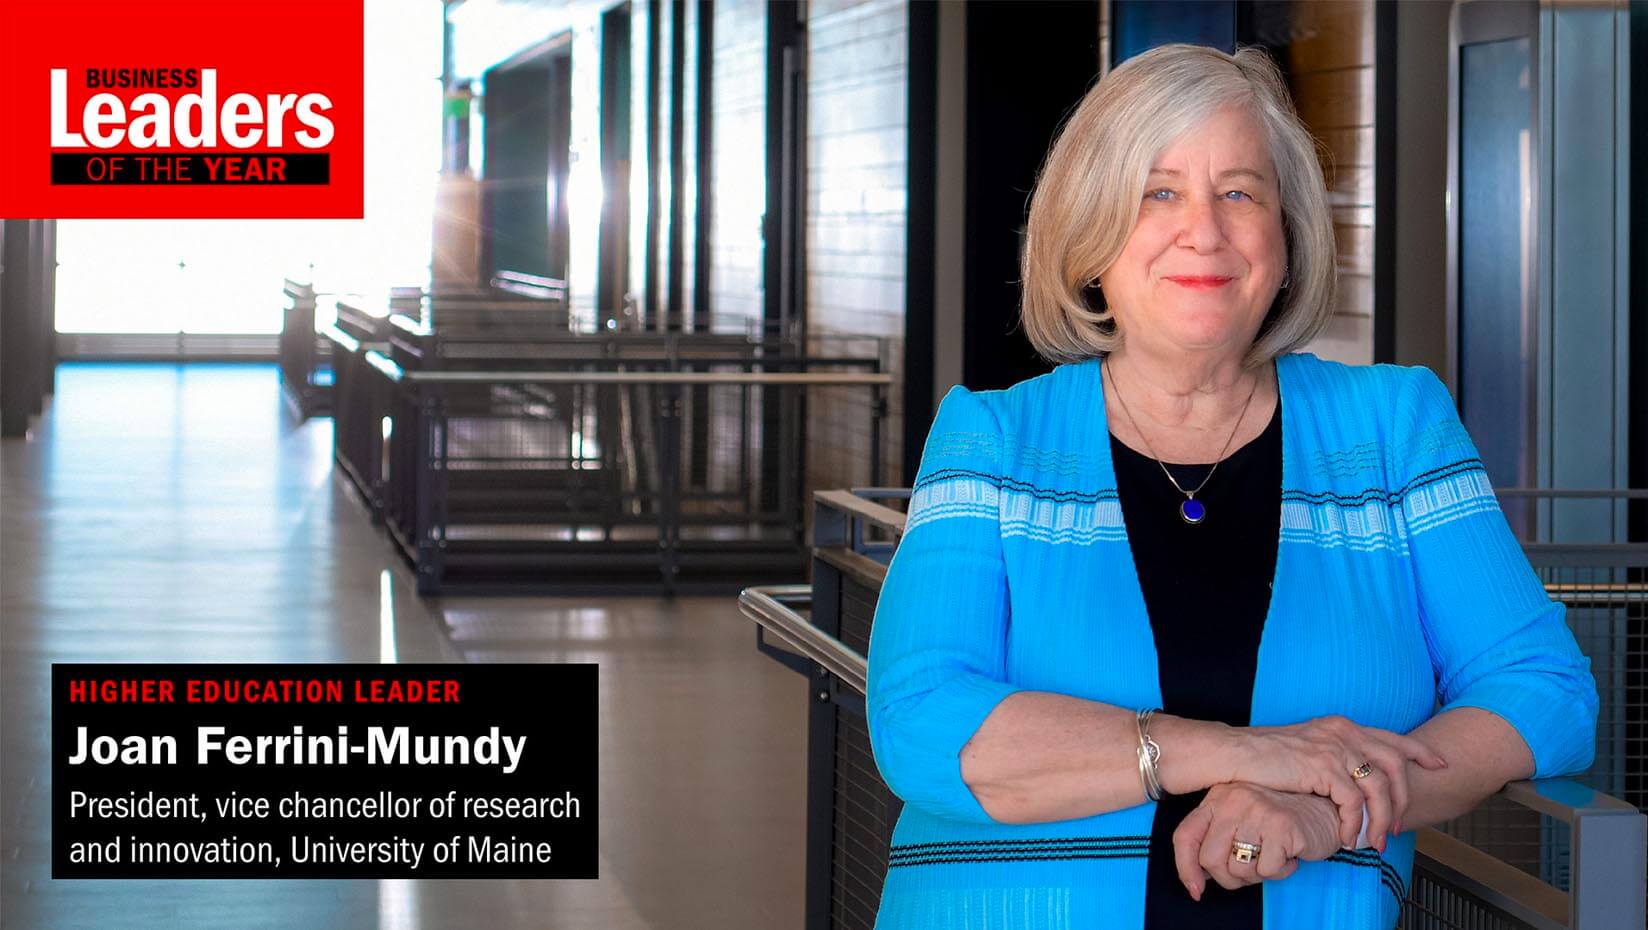 Ferrini-Mundy awarded Business Leader of the Year by Mainebiz for dedication to STEM education – UMaine News